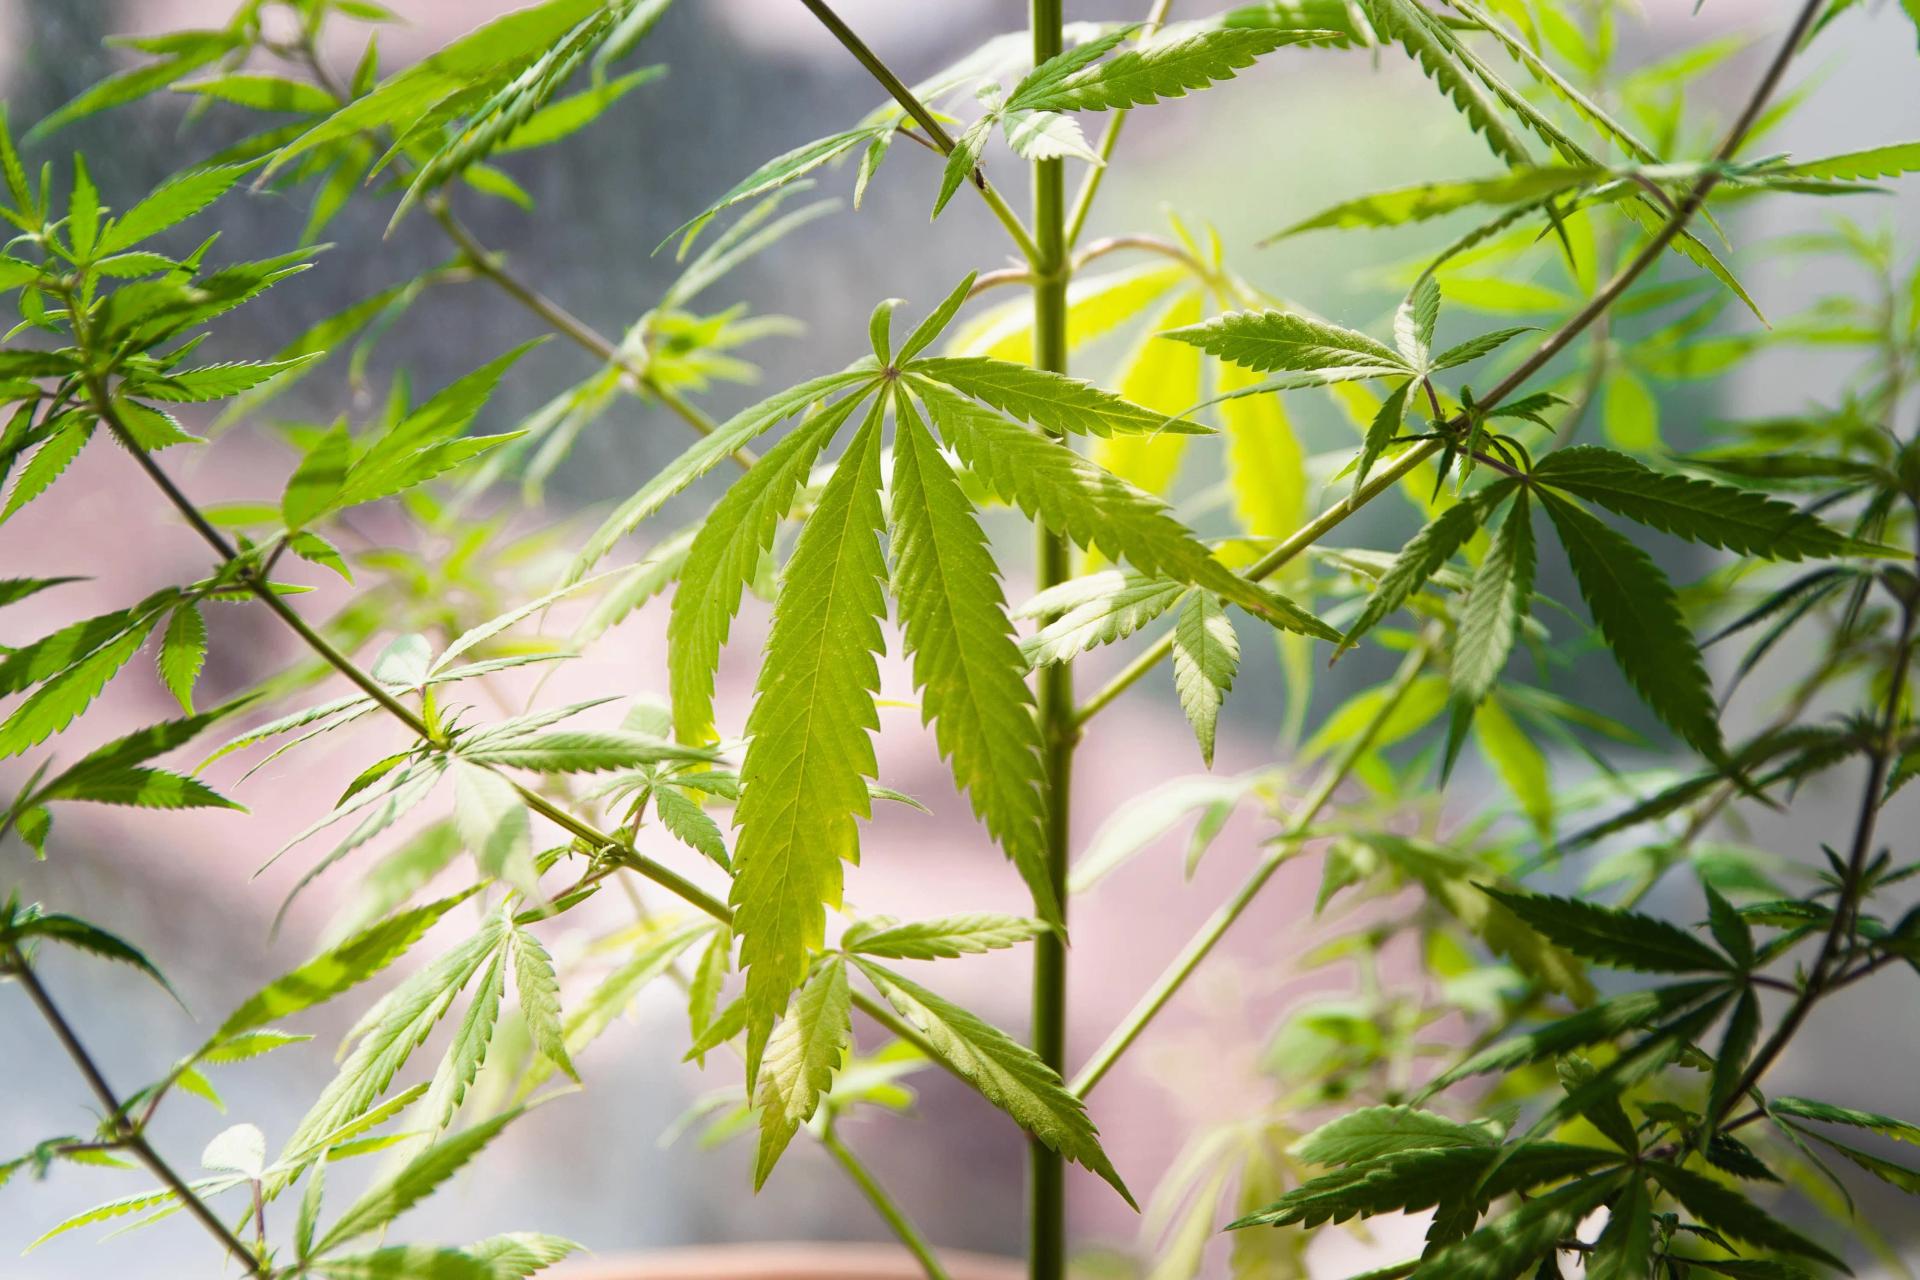 Leaves of Cannabis on Thin Stalks